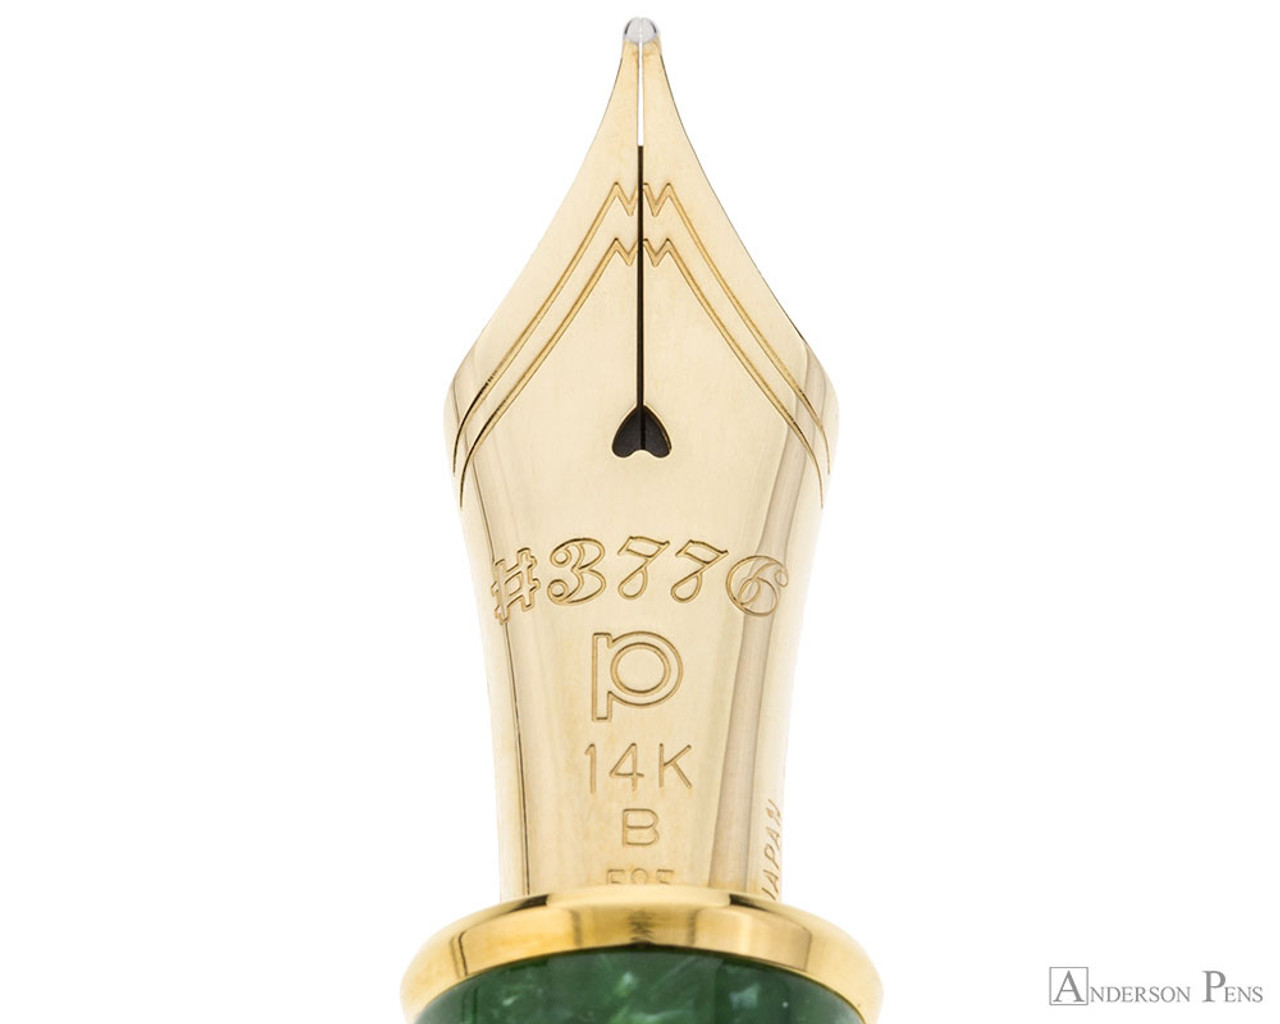 Platinum 3776 Celluloid Fountain Pen - Jade - Anderson Pens, Inc.